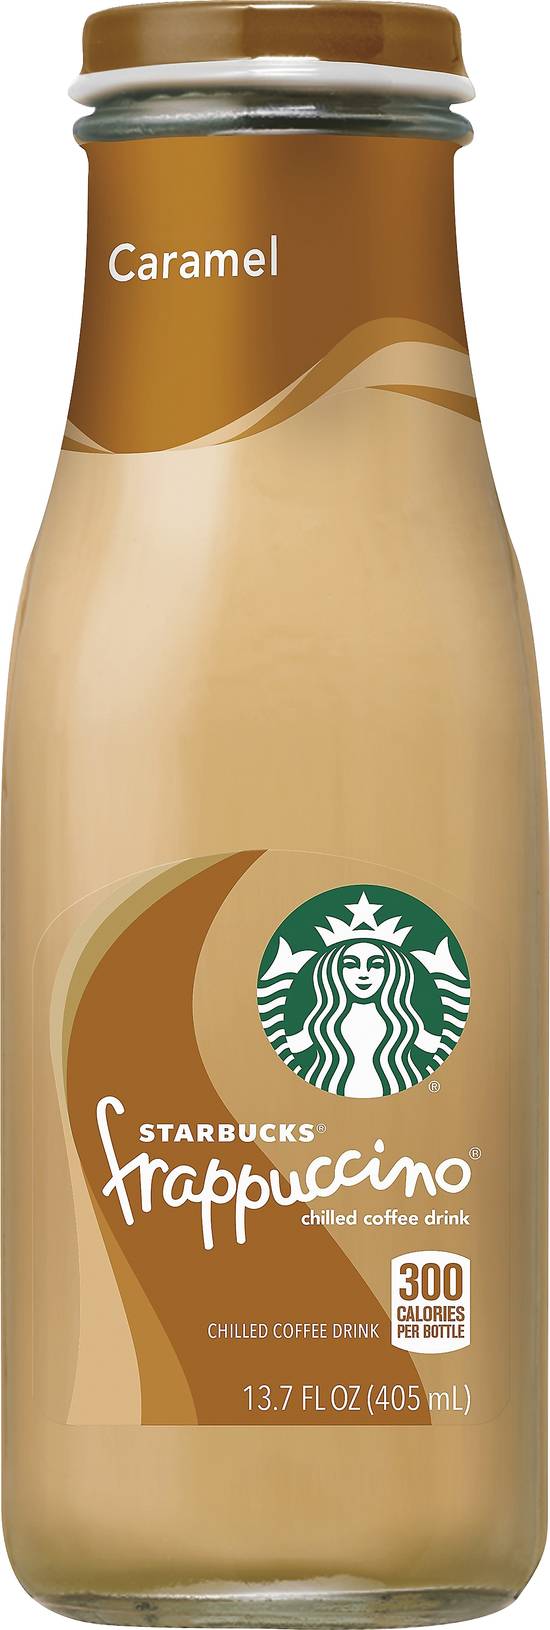 Starbucks Frappuccino Coffee Drink (13.7 fl oz)